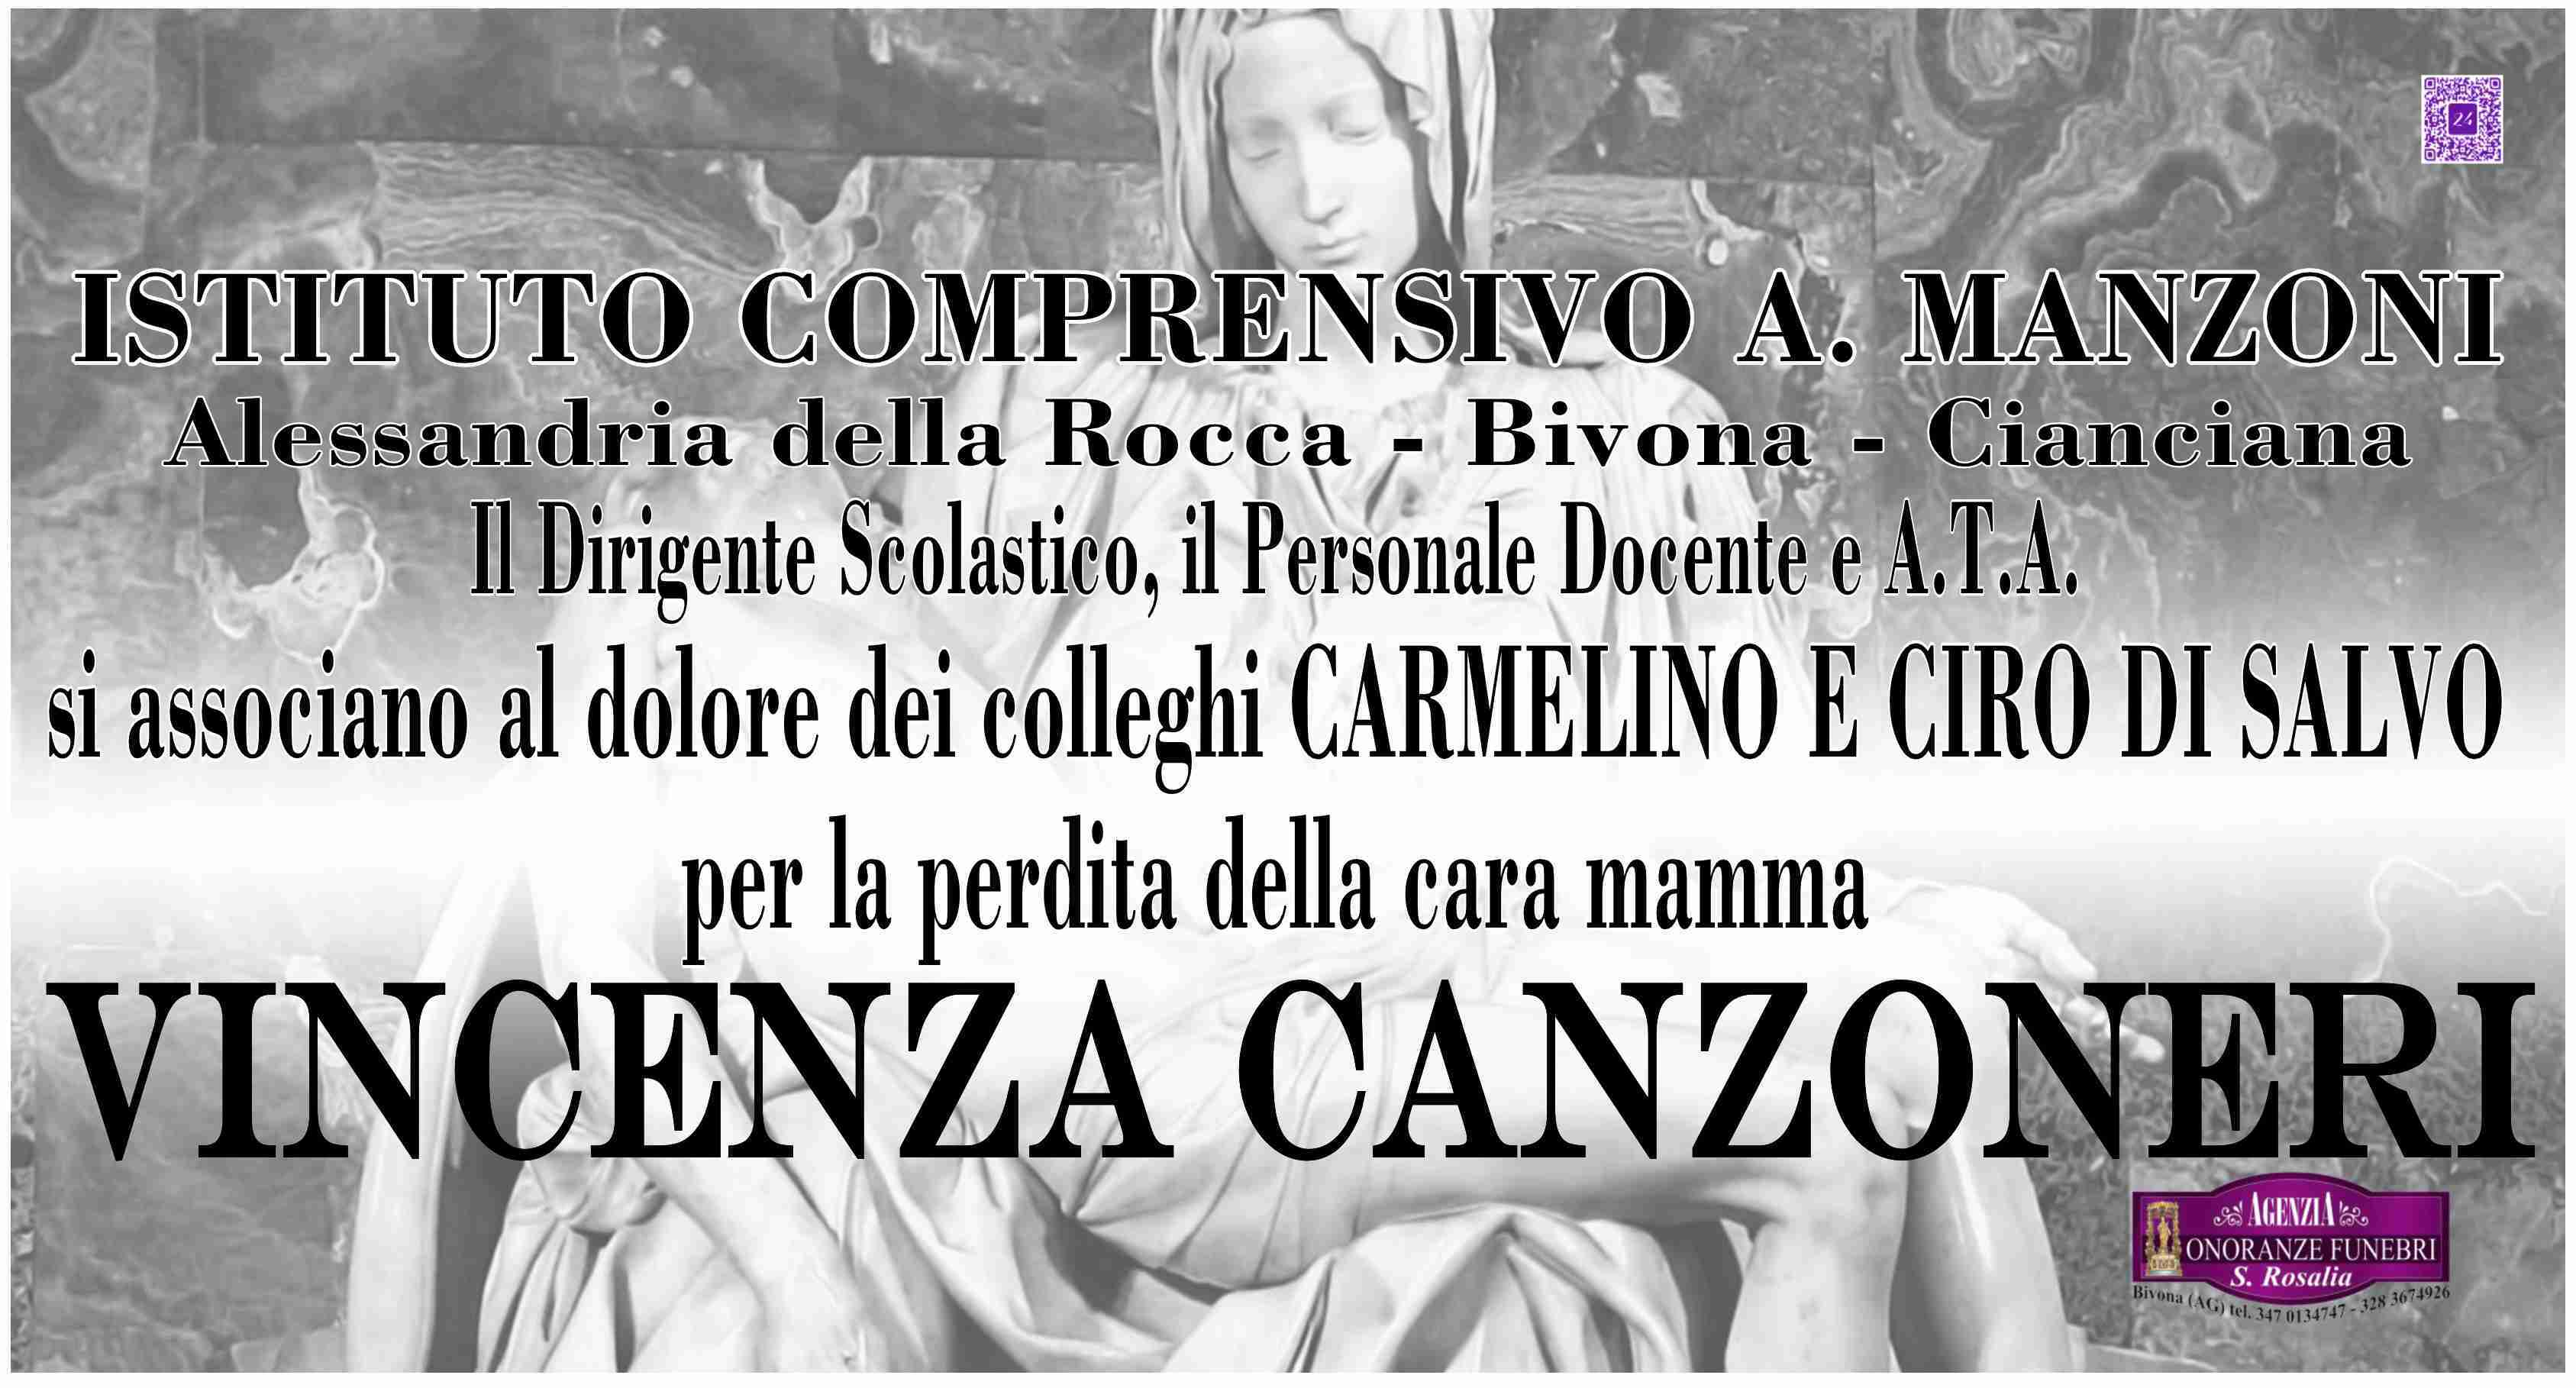 Vincenza Canzoneri